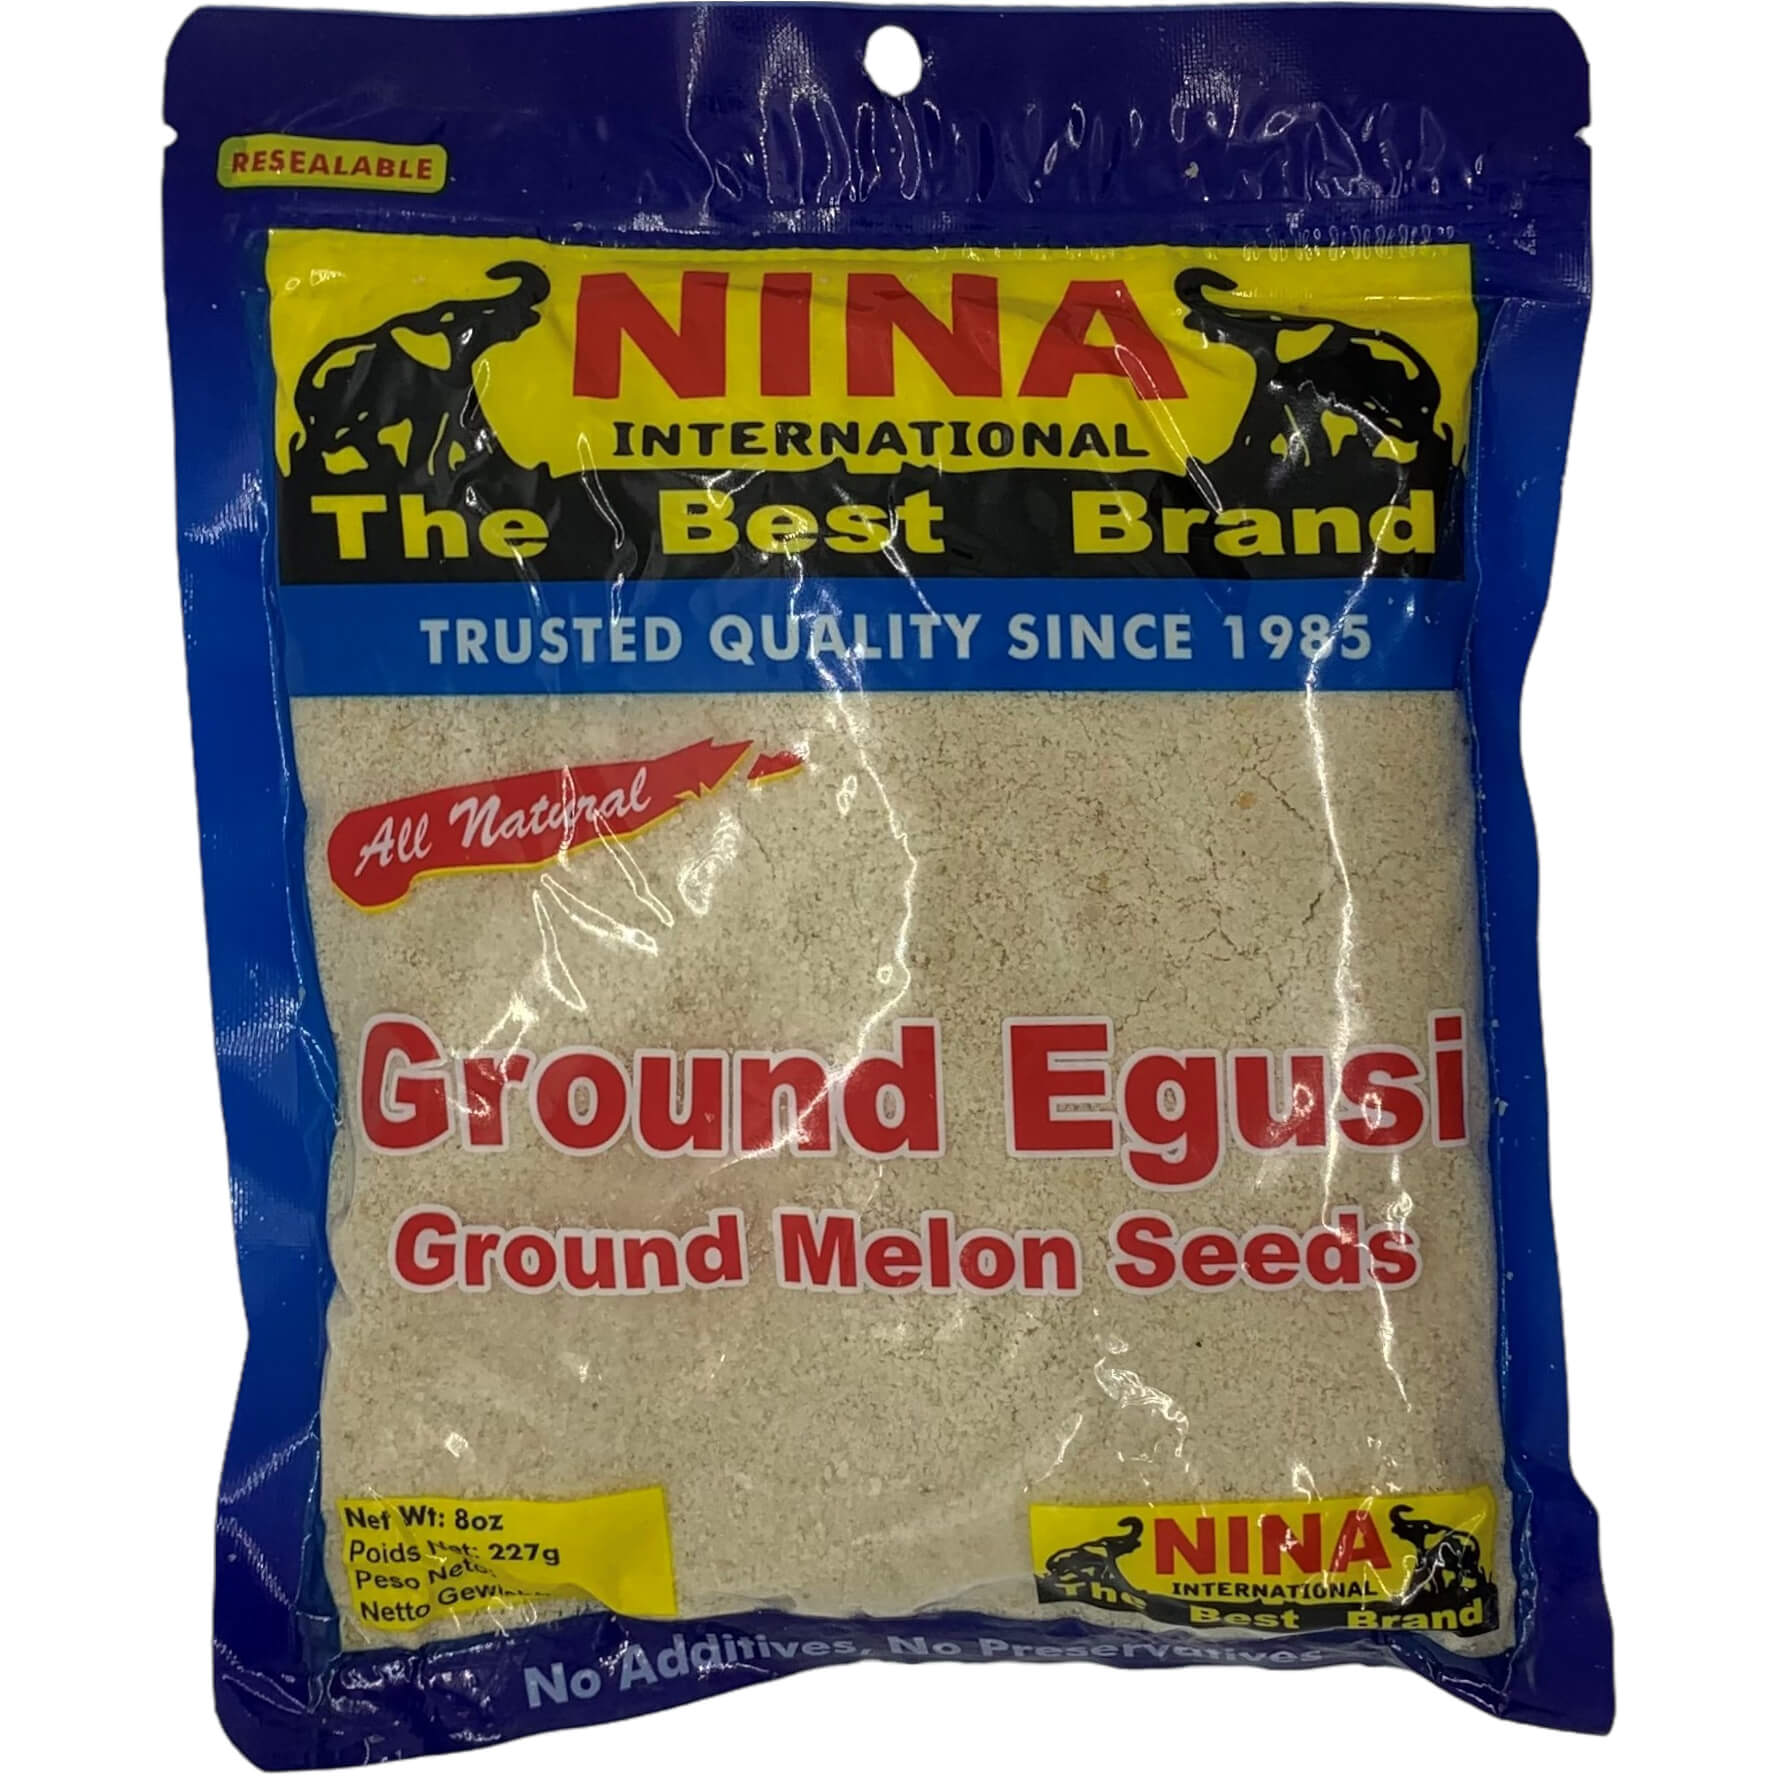 Nina Ground Egusi Ground Melon Seeds 8 oz